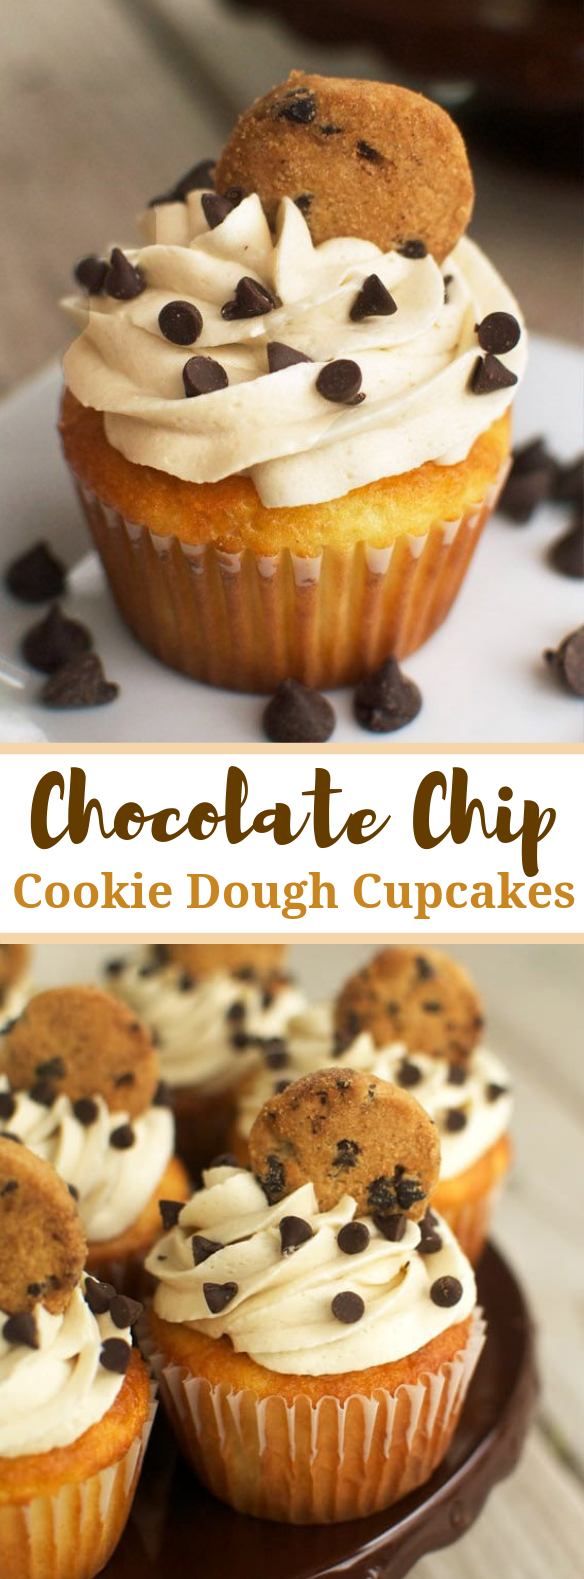 CHOCOLATE CHIP COOKIE DOUGH CUPCAKES #dessert #cupcake